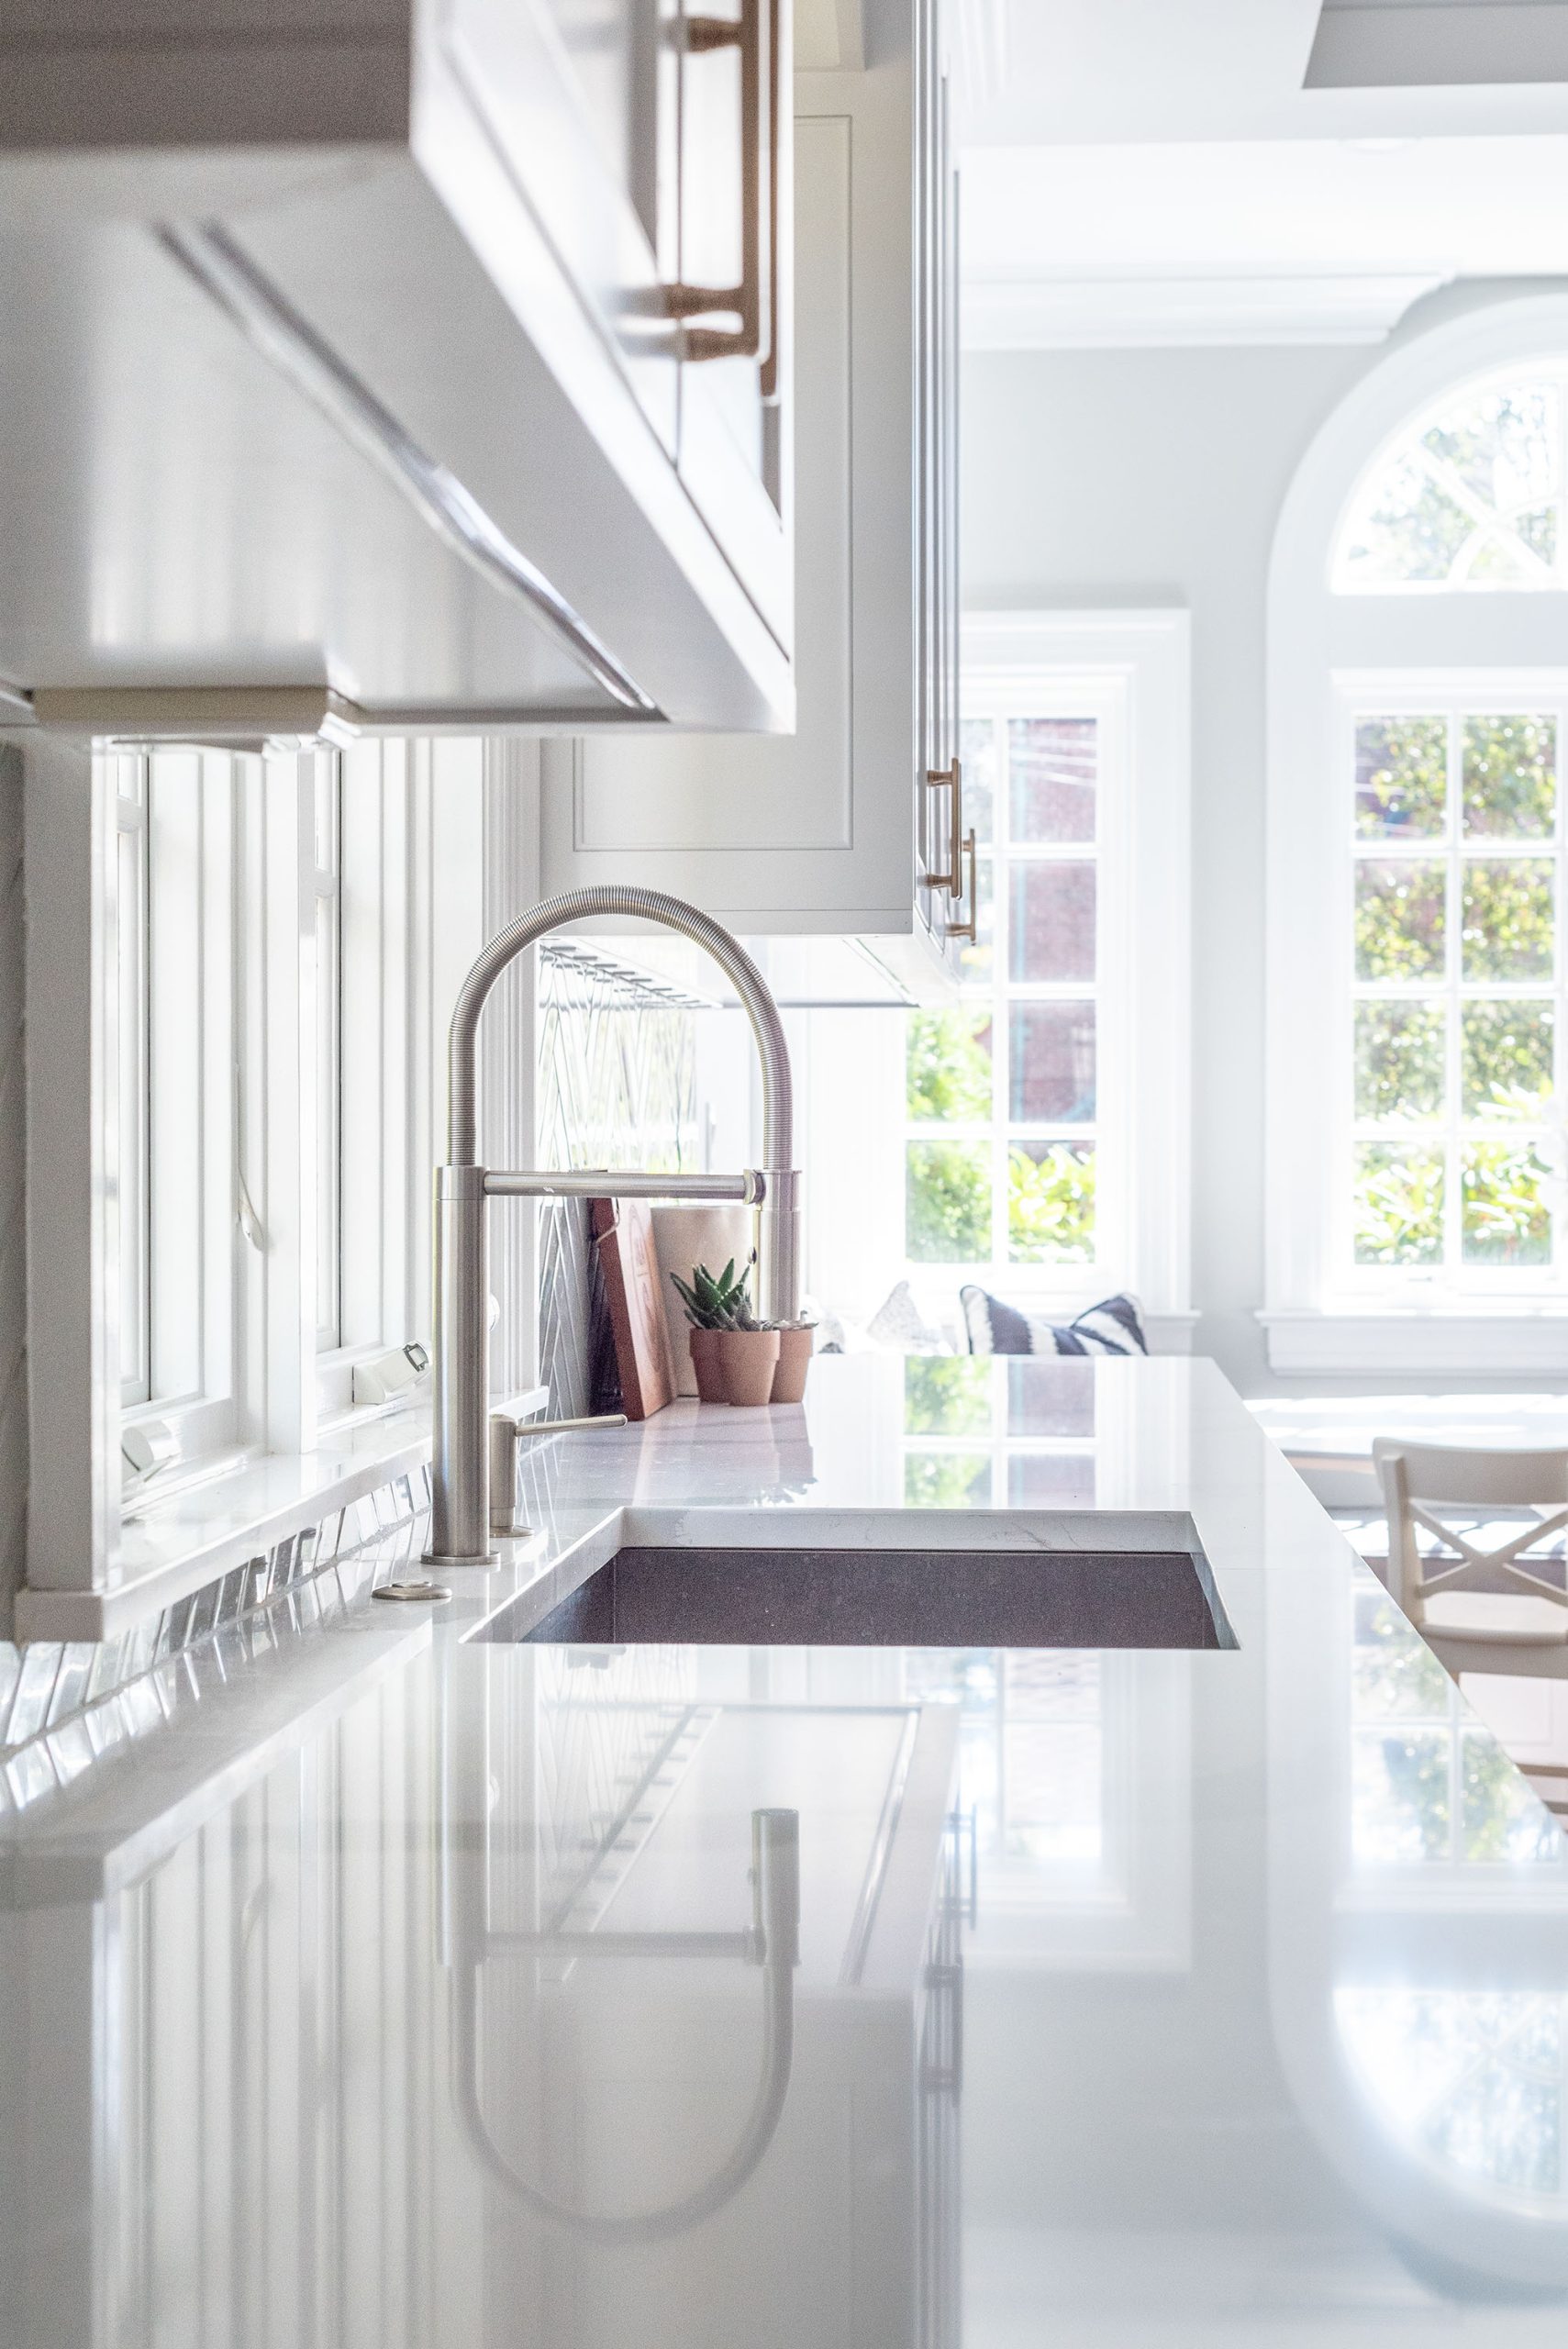 A bright kitchen interior with a sleek, modern look.